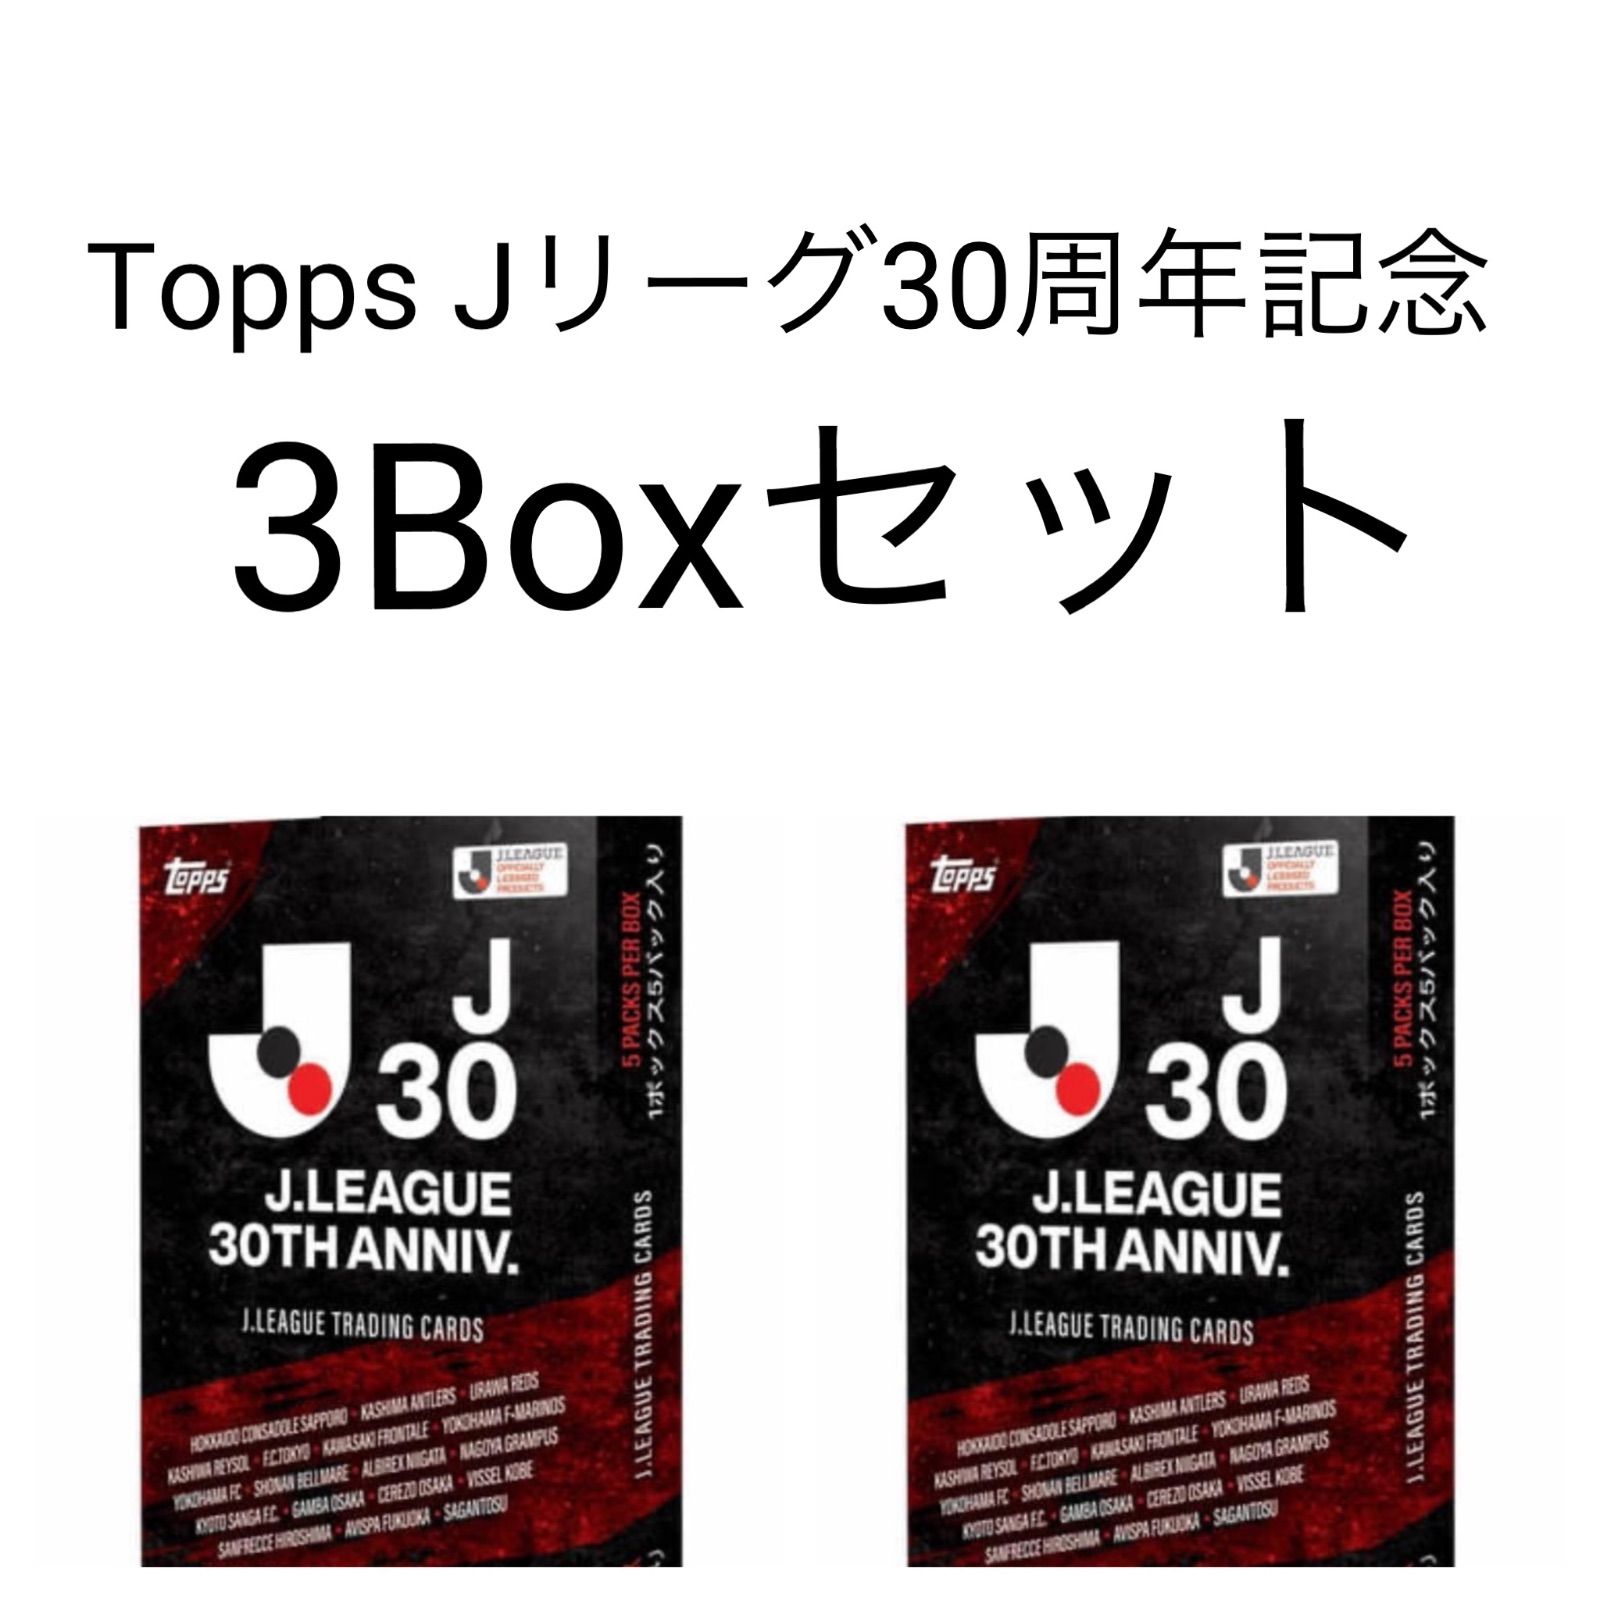 3BOX topps Jリーグ 30周年 限定生産 | mrmotivator.com